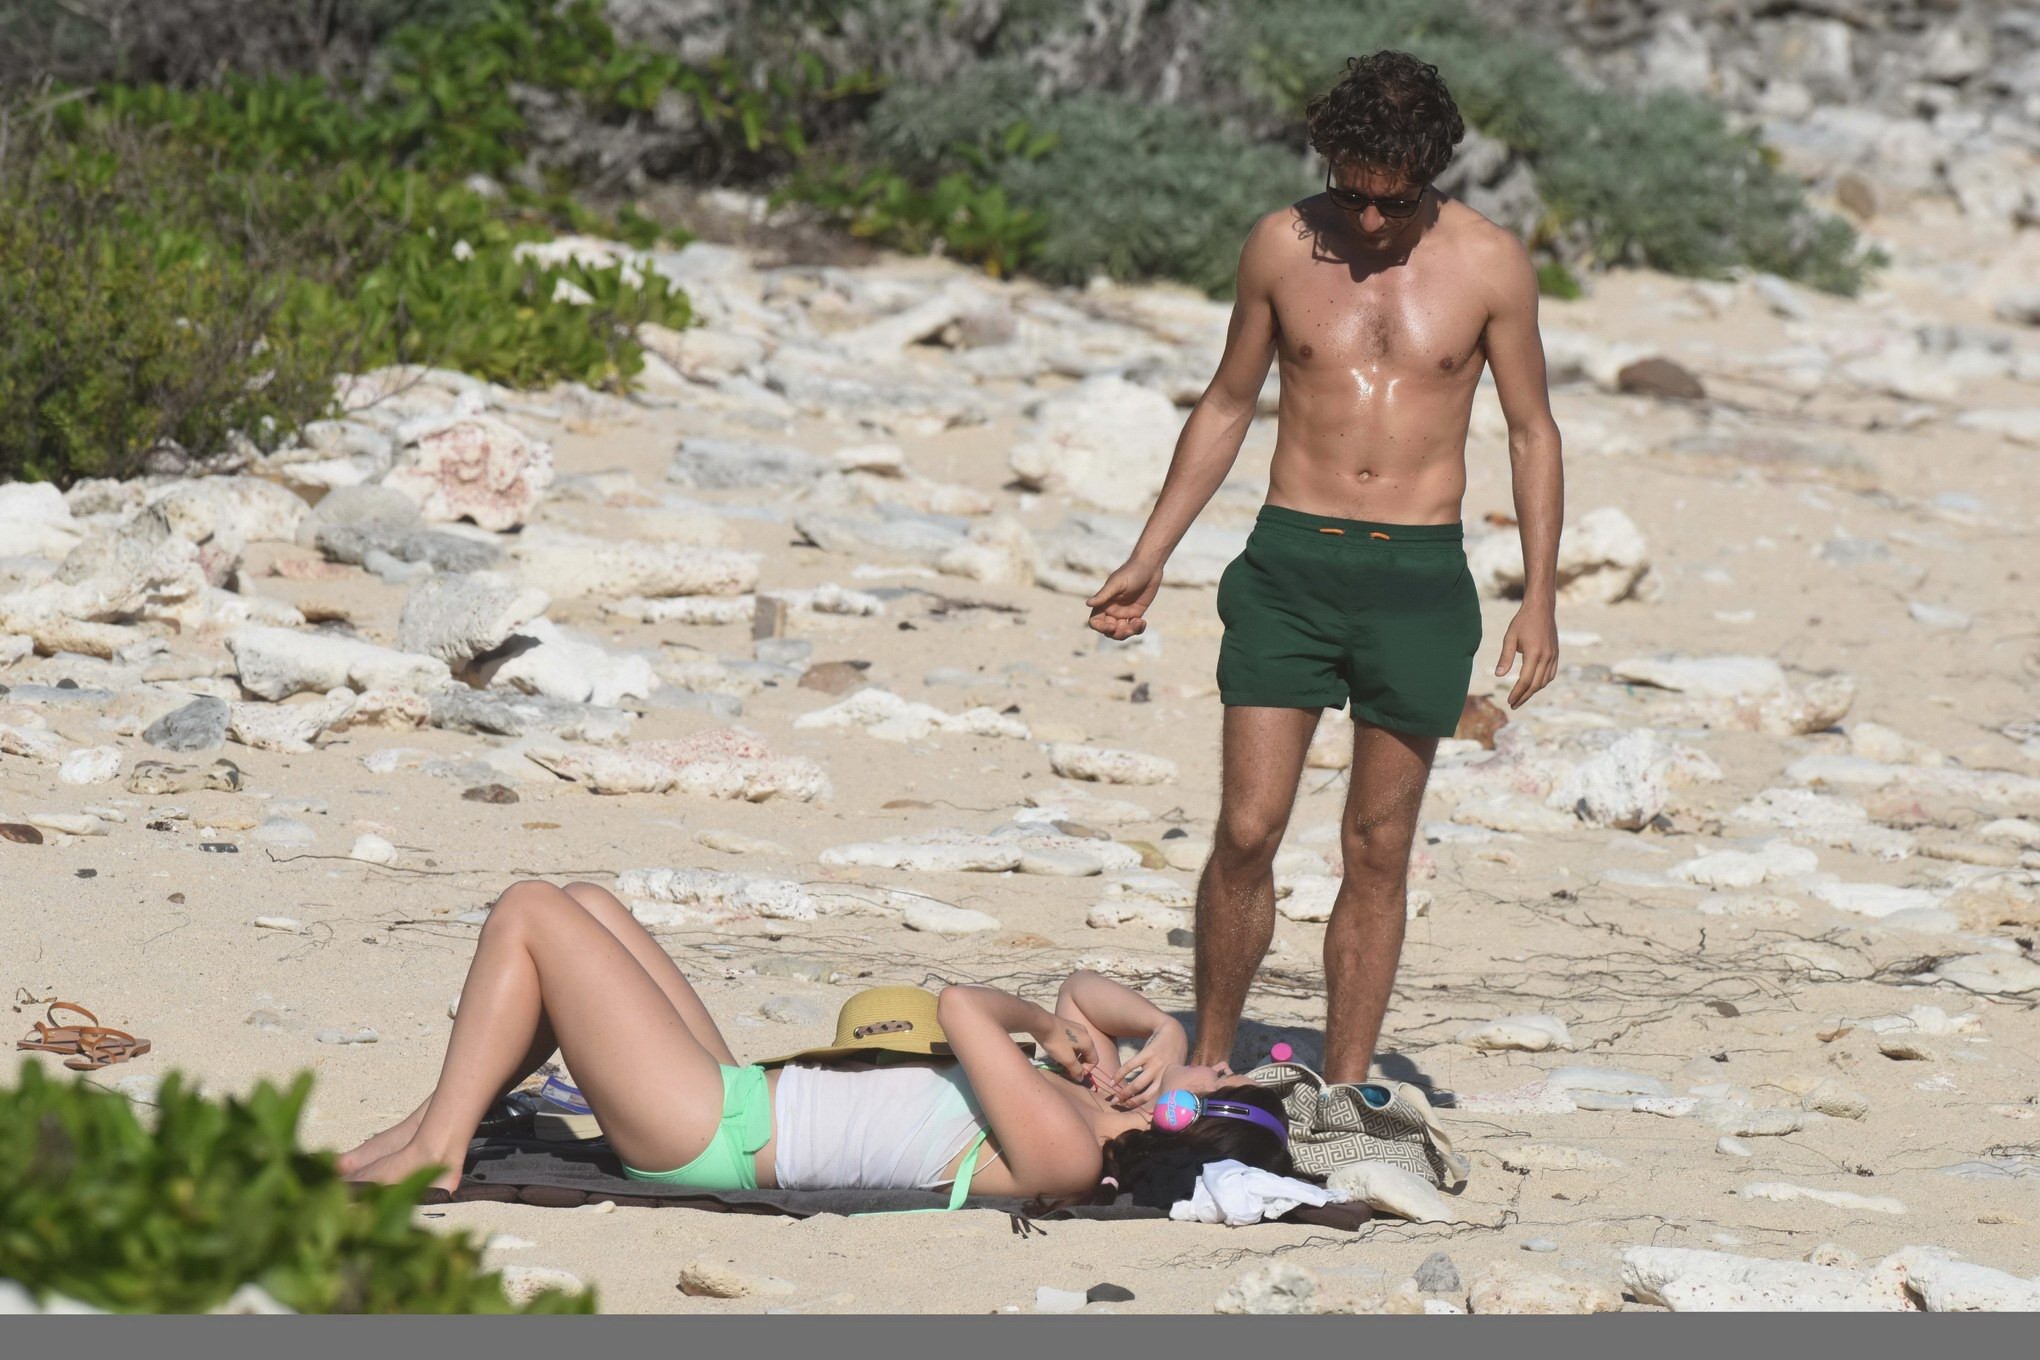 Lana del rey portant un bikini vert sur la plage de st barts
 #75176934